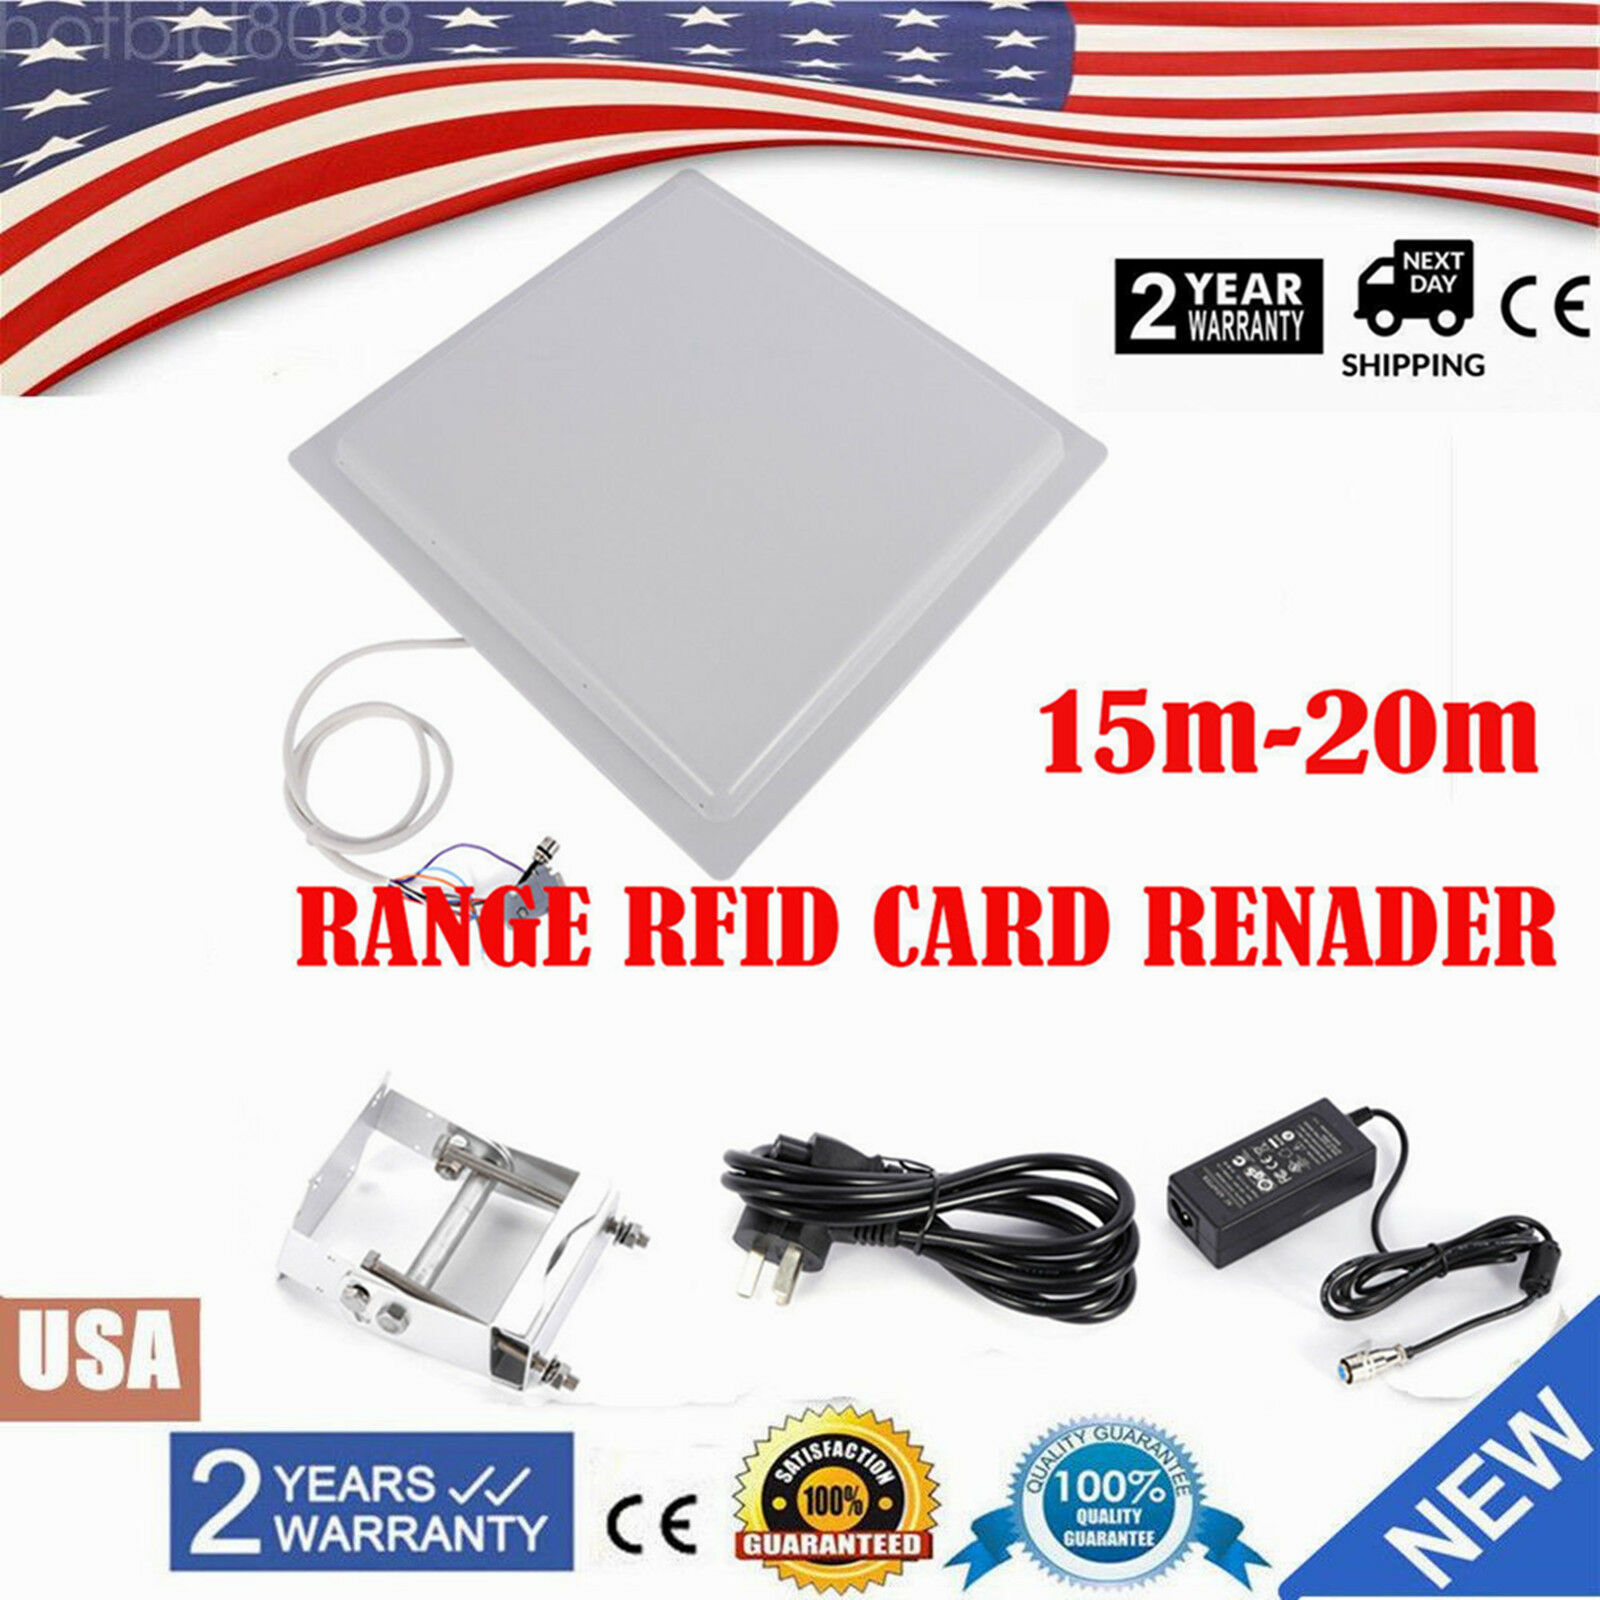 Integrative Uhf Rfid Card Reader15m Long Range 12dbi Antenna Rs232/rs485/wiegand